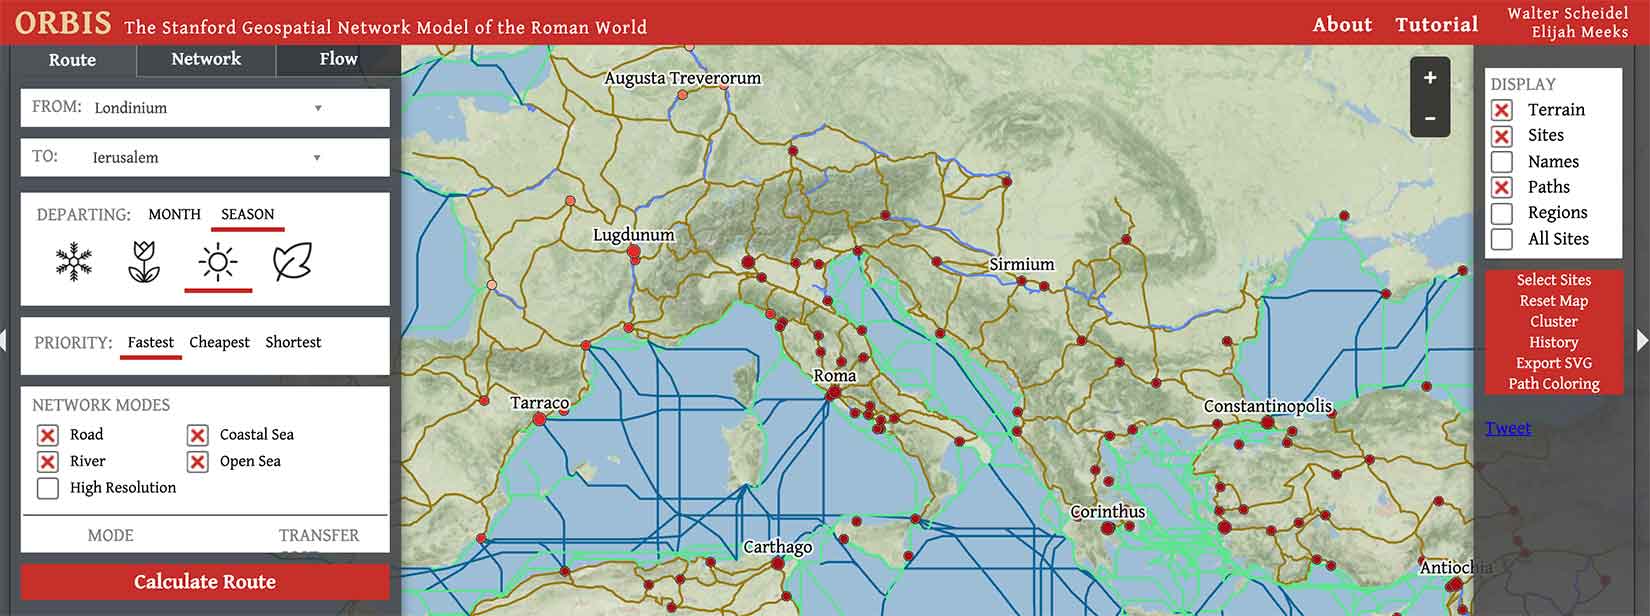 Orbis-Geospatial-Network-Rome-Travel-Distance-Screen